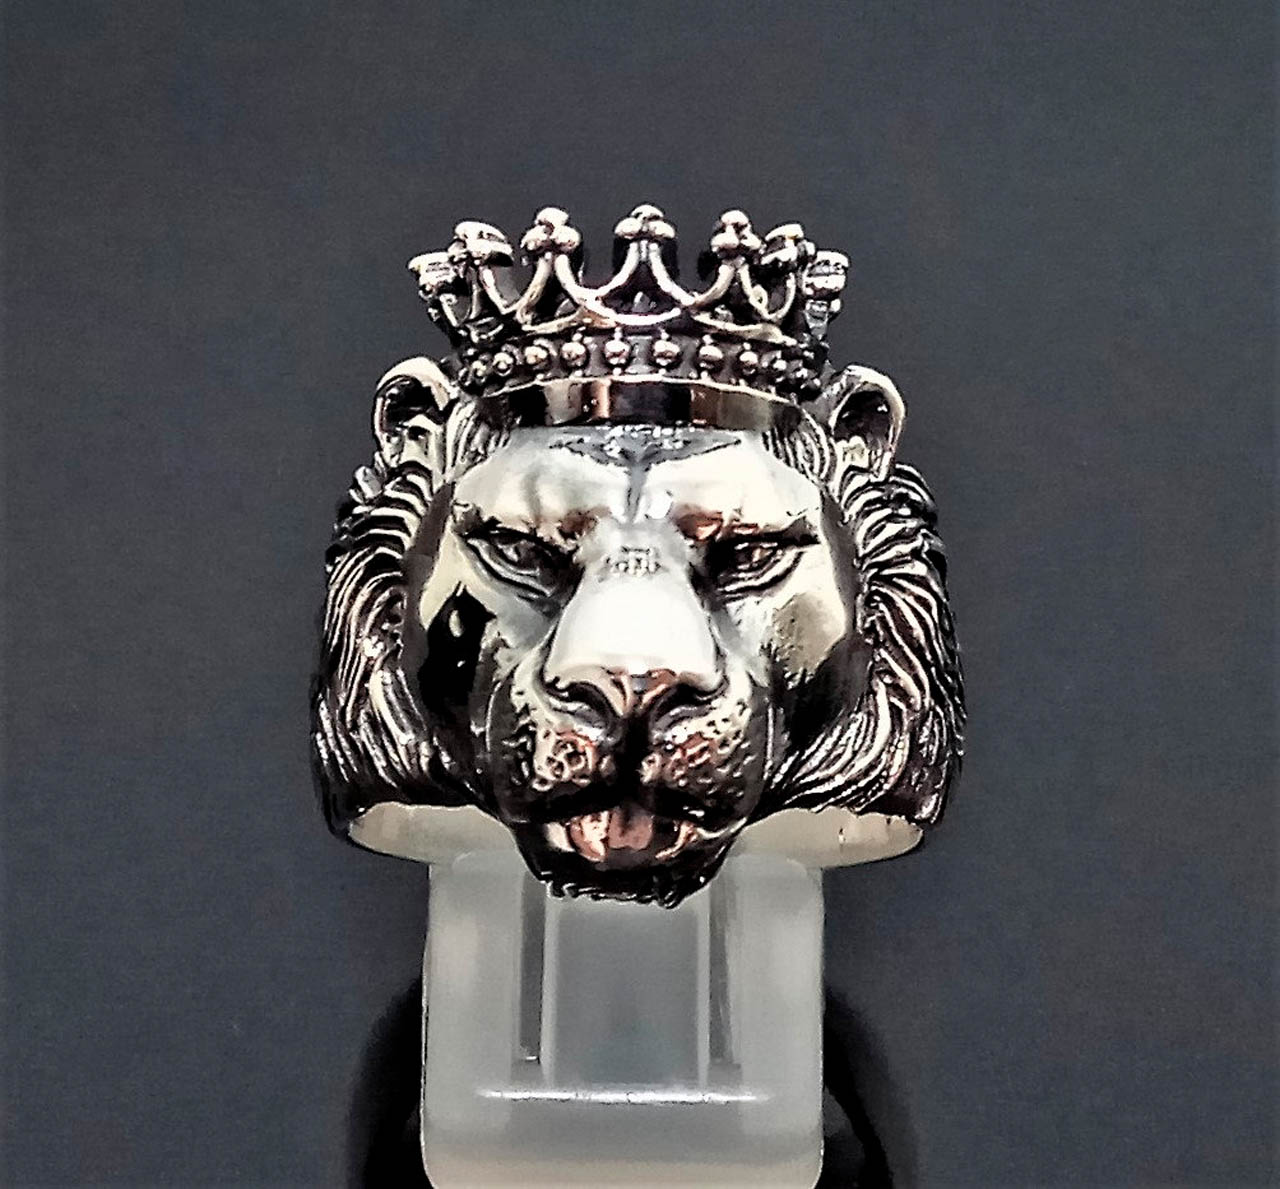 Lion Ring | Lion ring, Gold ring designs, Gold rings